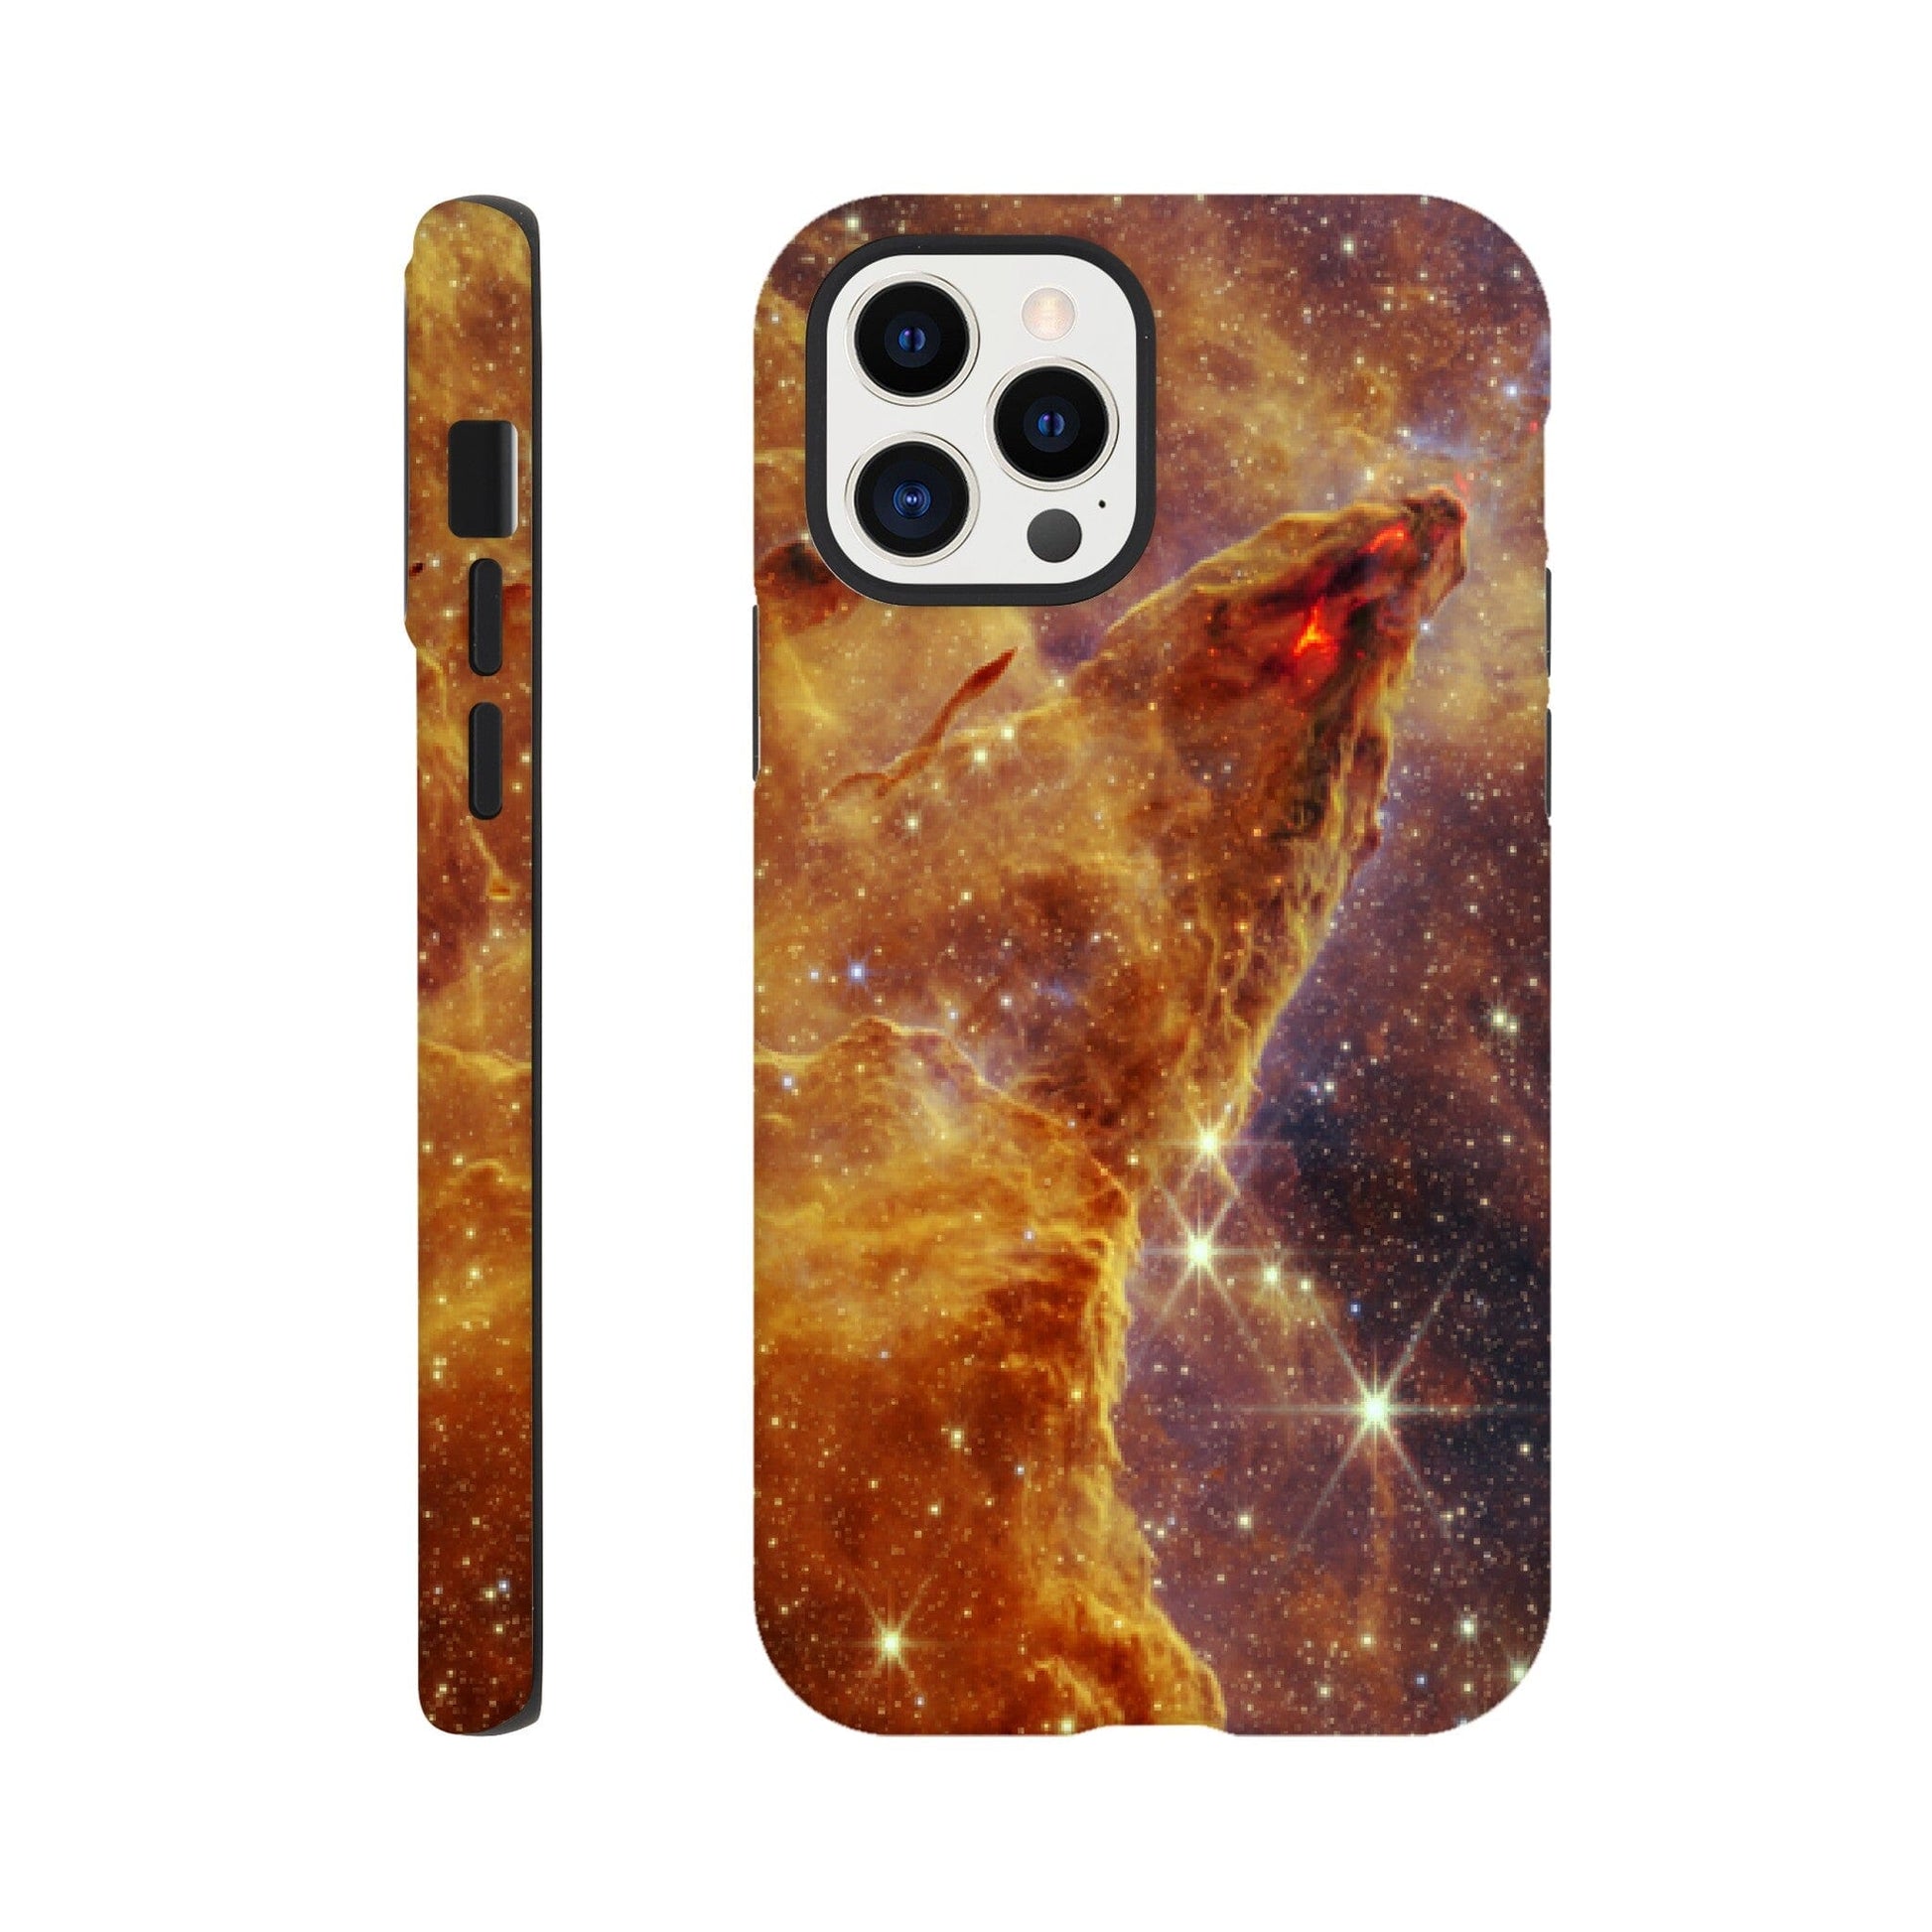 NASA - Phone Case Tough - 9. Pillars of Creation (NIRCam Image) - James Webb Space Telescope Phone Case TP Aviation Art iPhone 12 Pro 